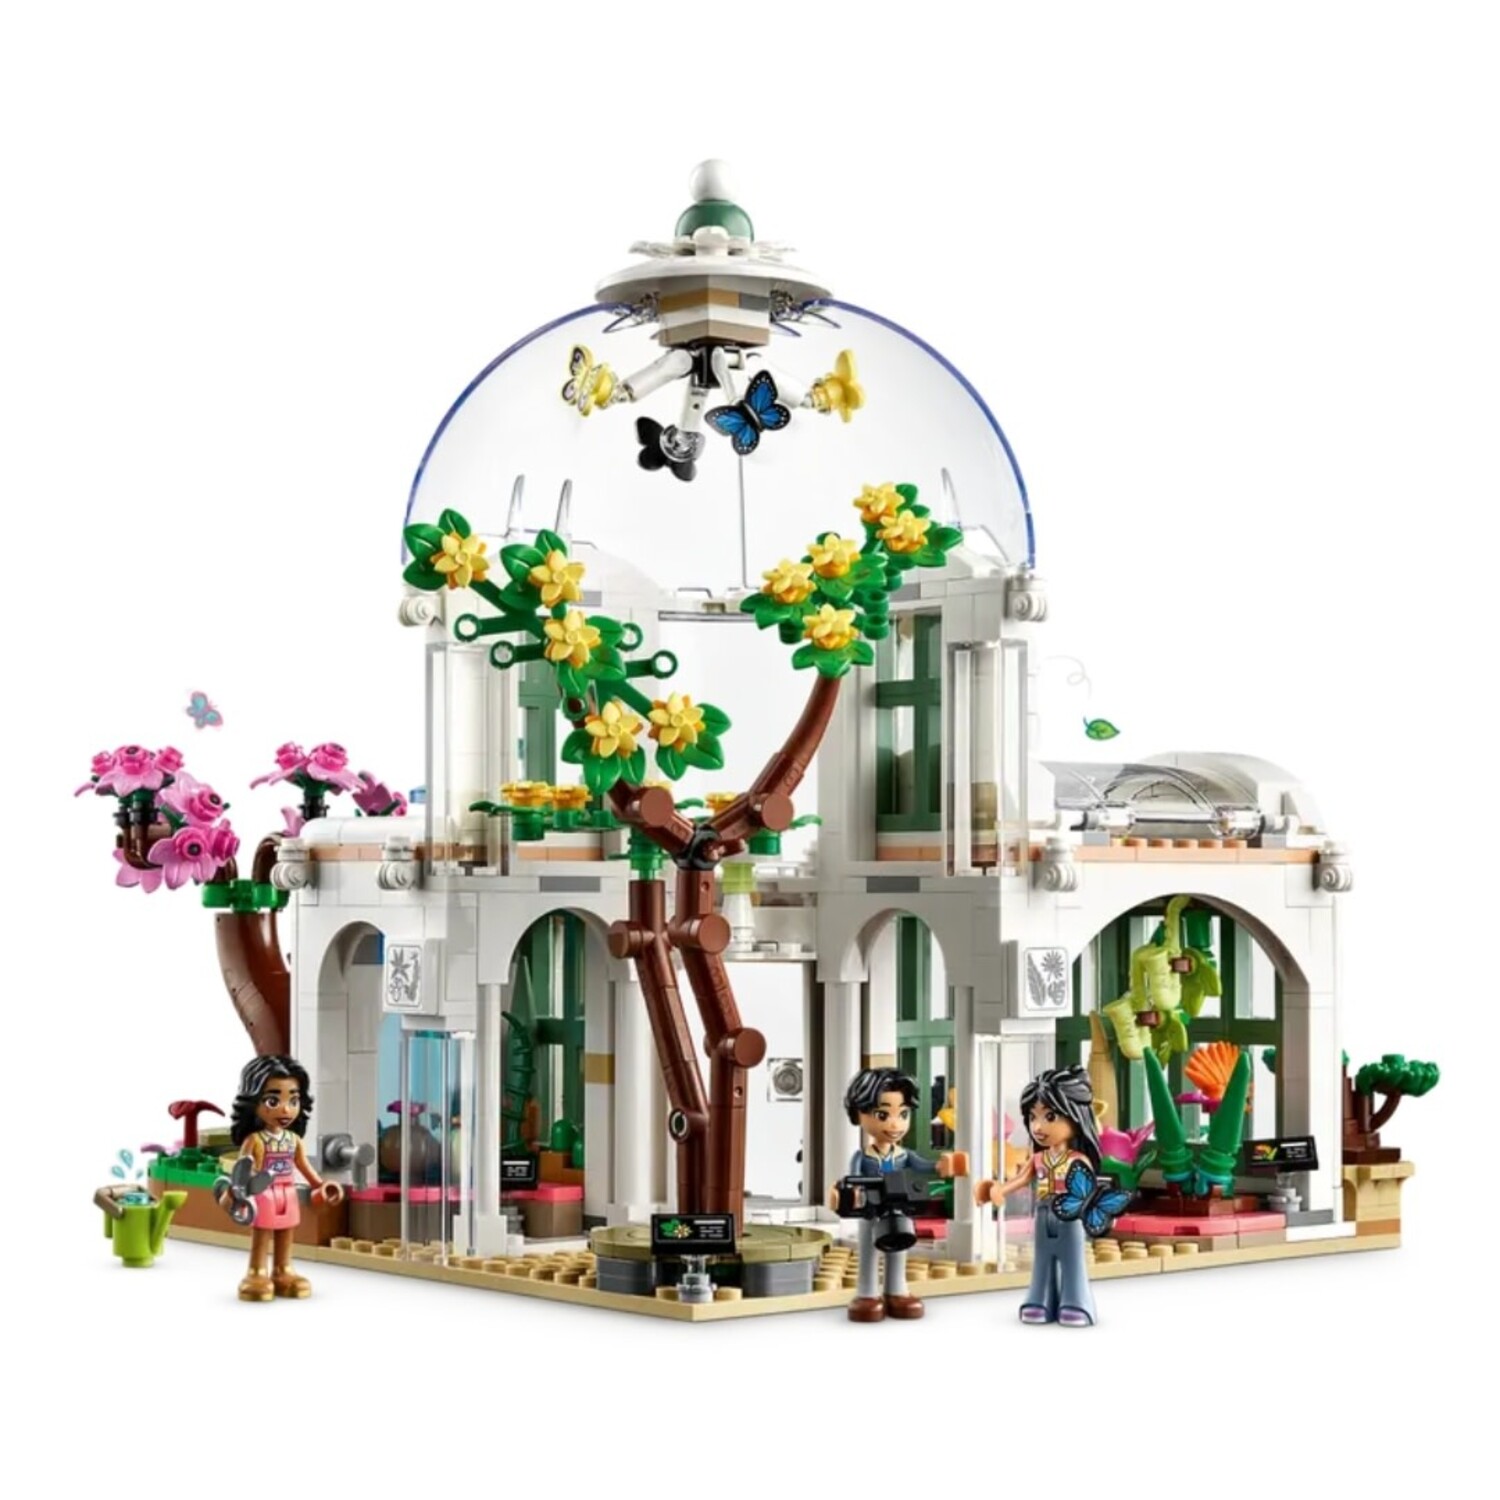 Botanical Garden LEGO Friends - Mudpuddles Toys and Books